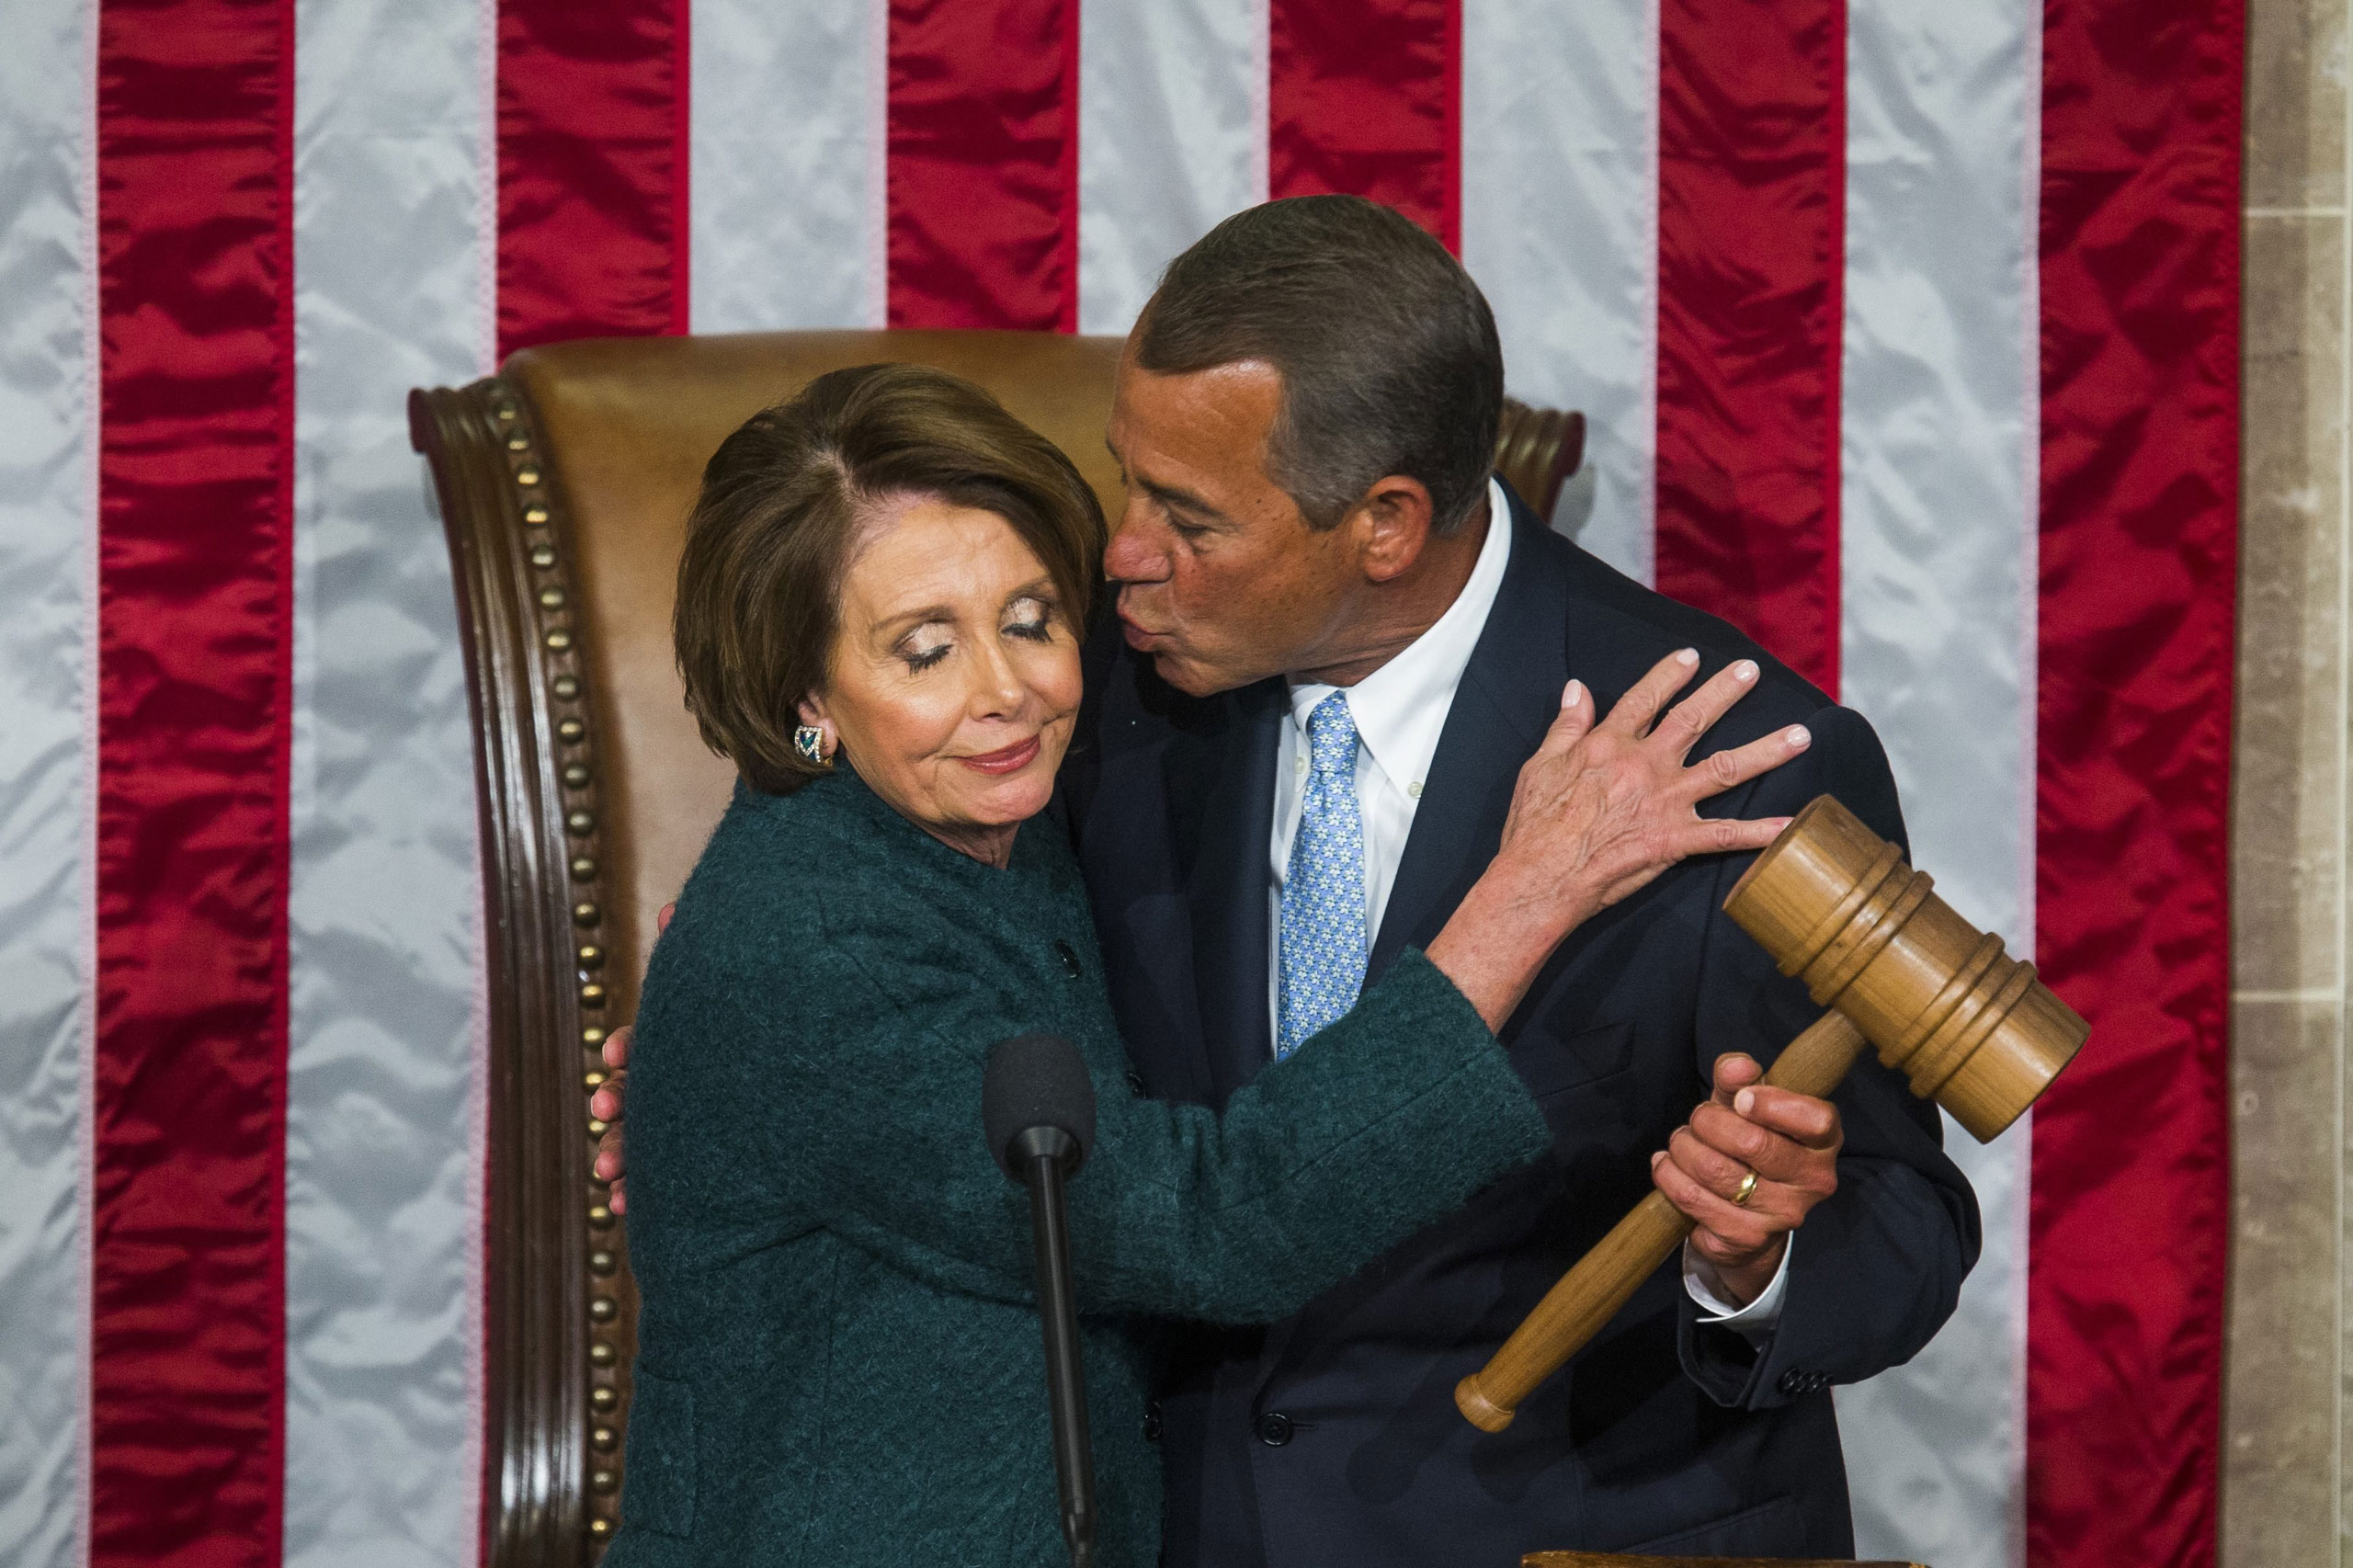 Former Republican Speaker of the House John Boehner kisses Democratic House minority leader Nancy Pelosi after Boehner was re-elected as Speaker of the House on the floor of the House of Representatives in the U.S. Capitol in Washington, D.C. Jan. 6, 2015.